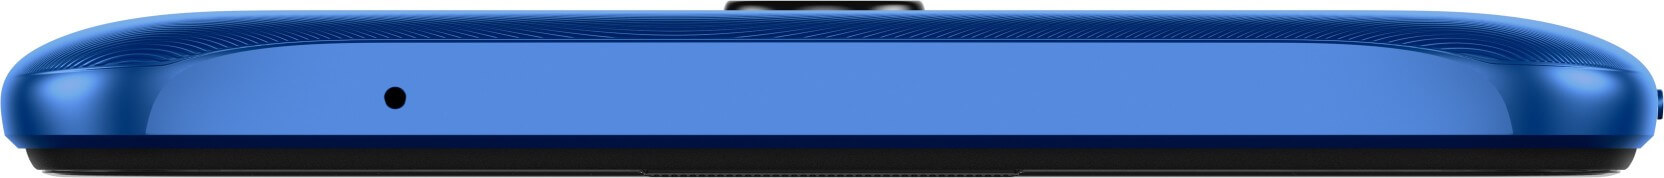 Xiaomi Redmi 8A (2GB RAM, 32GB Storage), 6.2", Dual SIM, 5000 mAh Battery - Ocean Blue